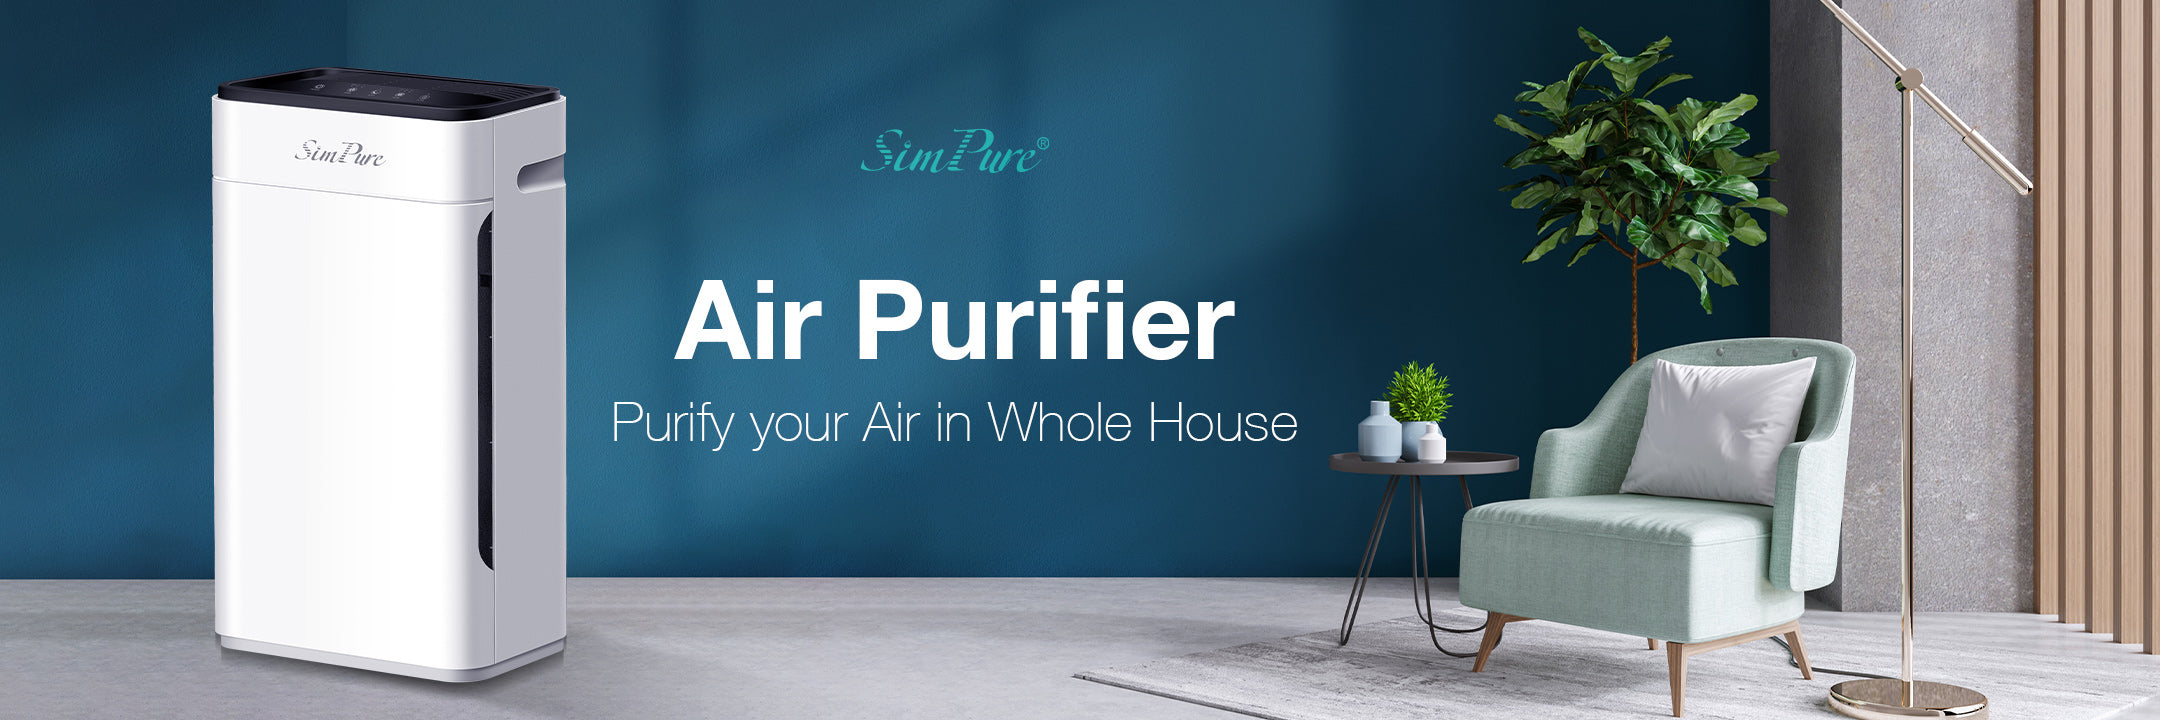 Intense Pure Air Purifier, Home Comfort